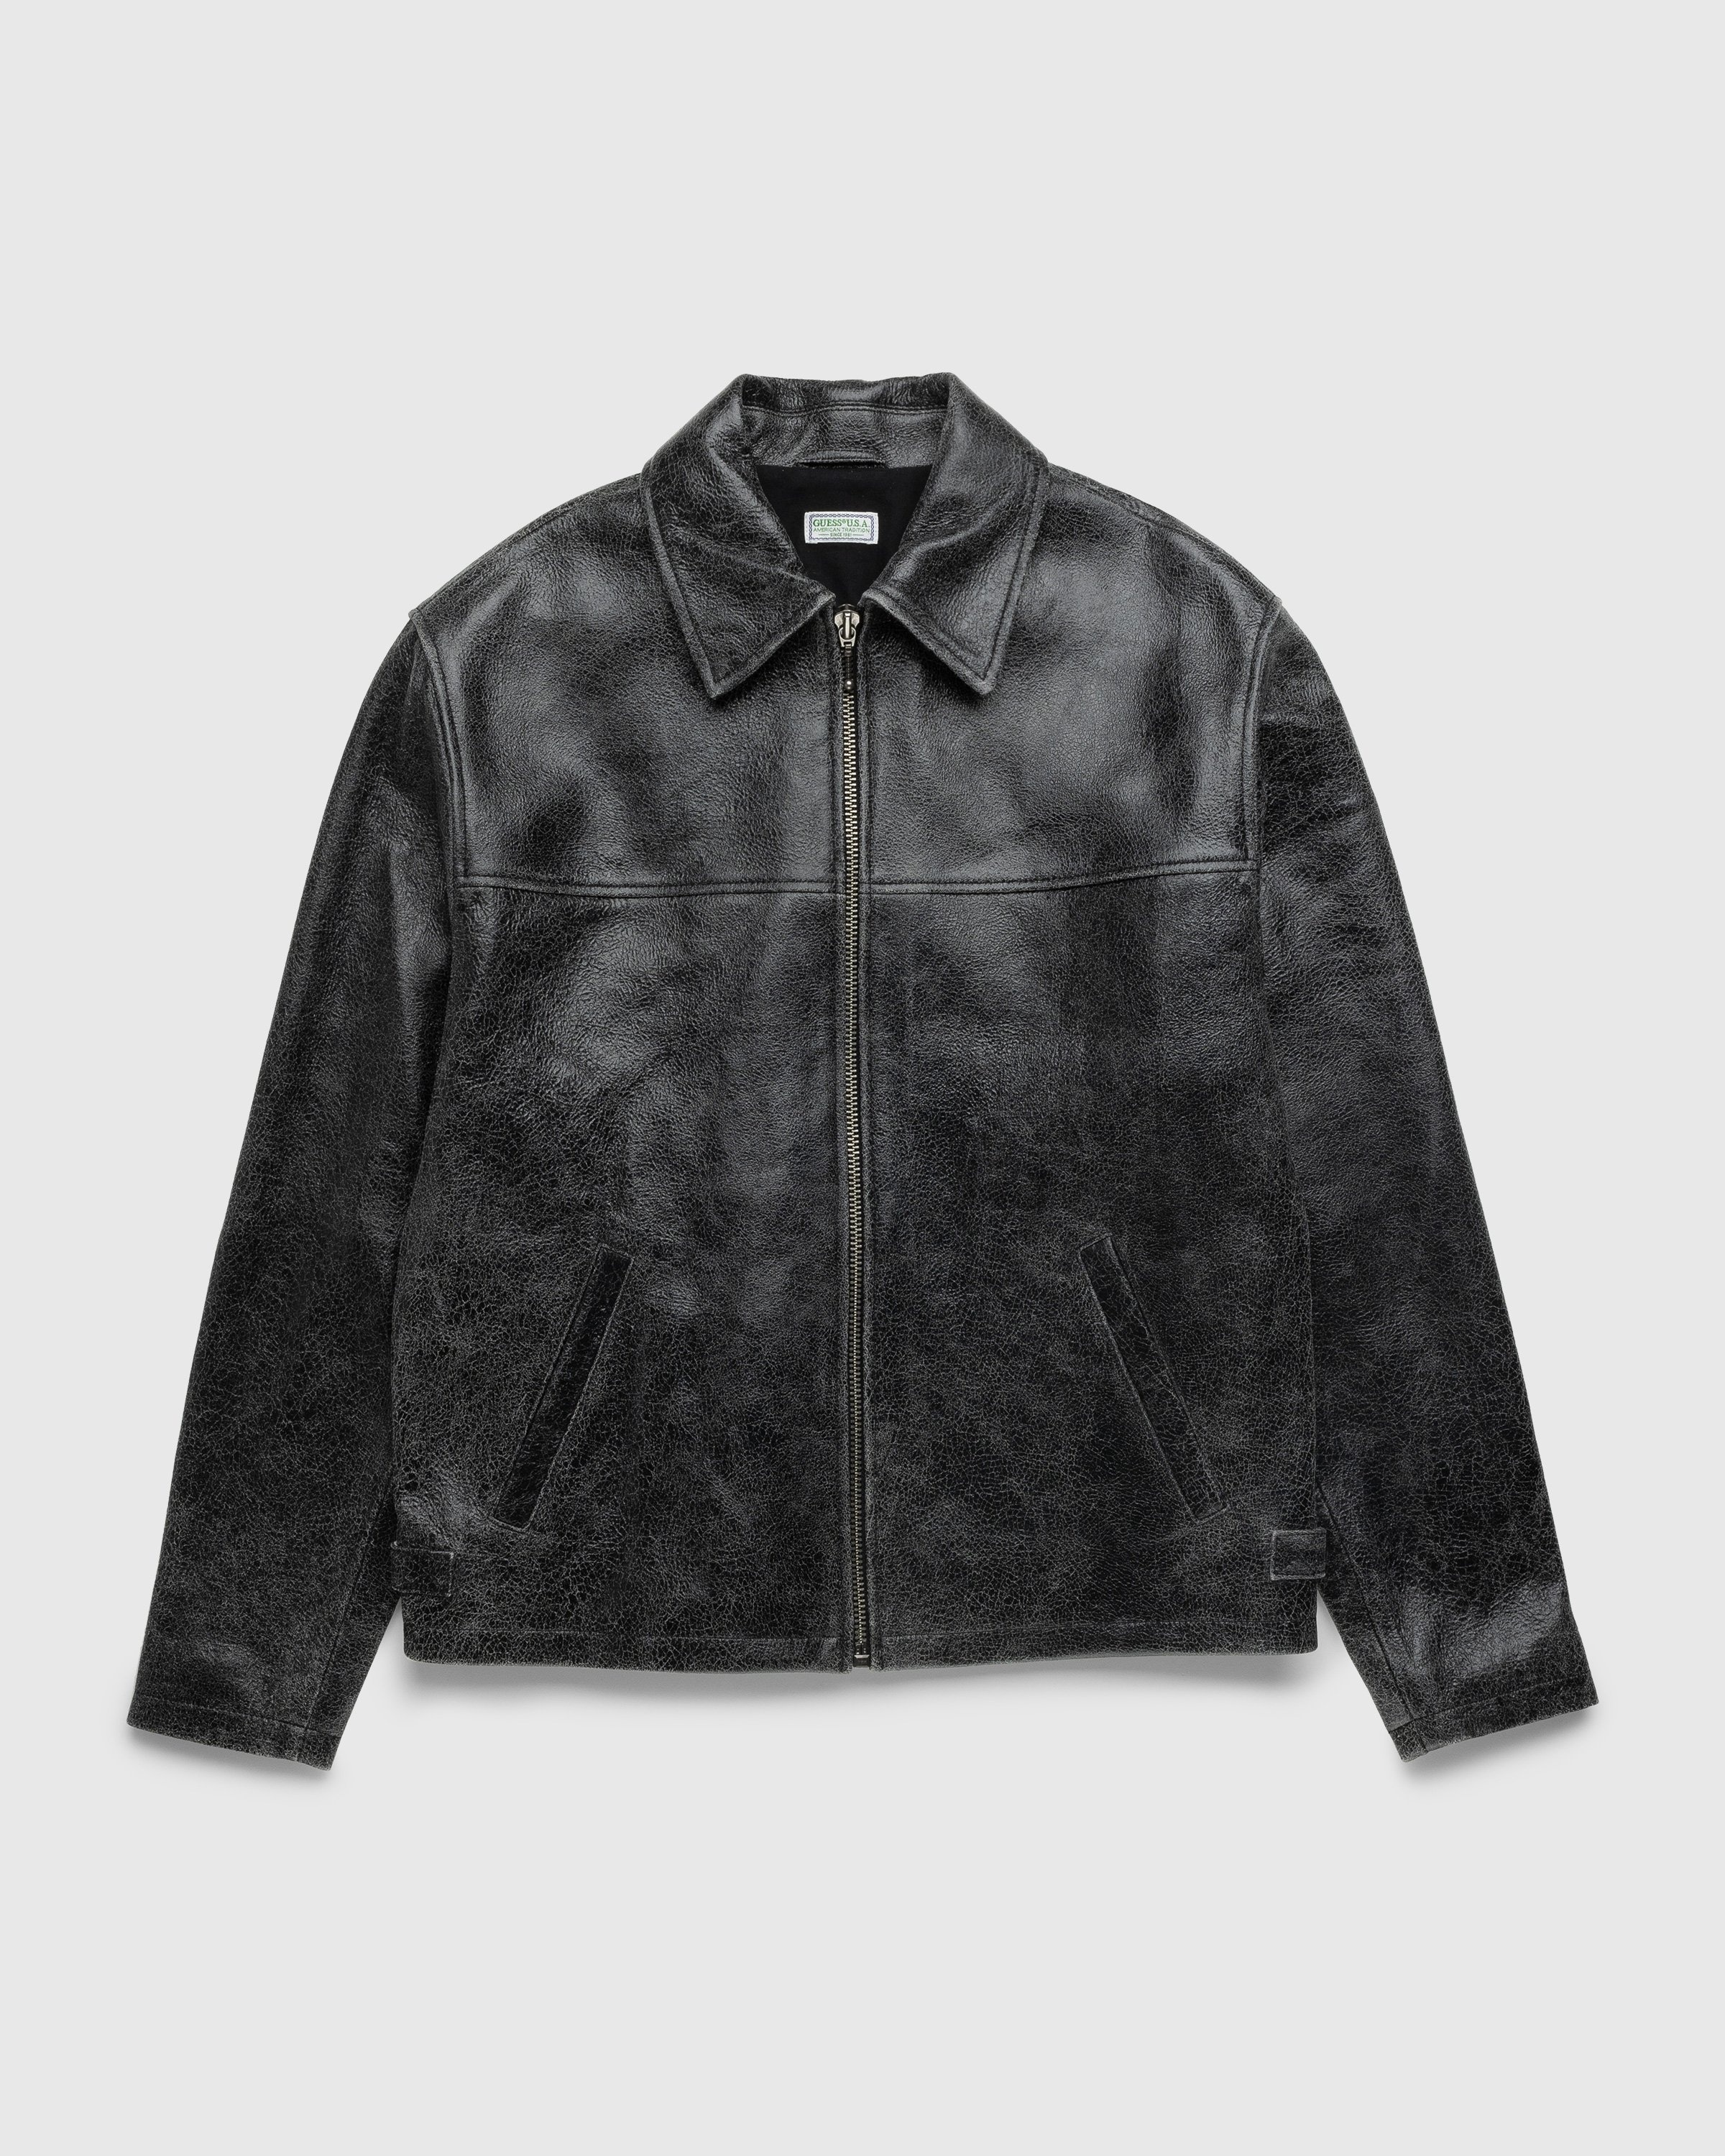 meteor Guinness salut Guess USA – Crackle Leather Jacket Black | Highsnobiety Shop